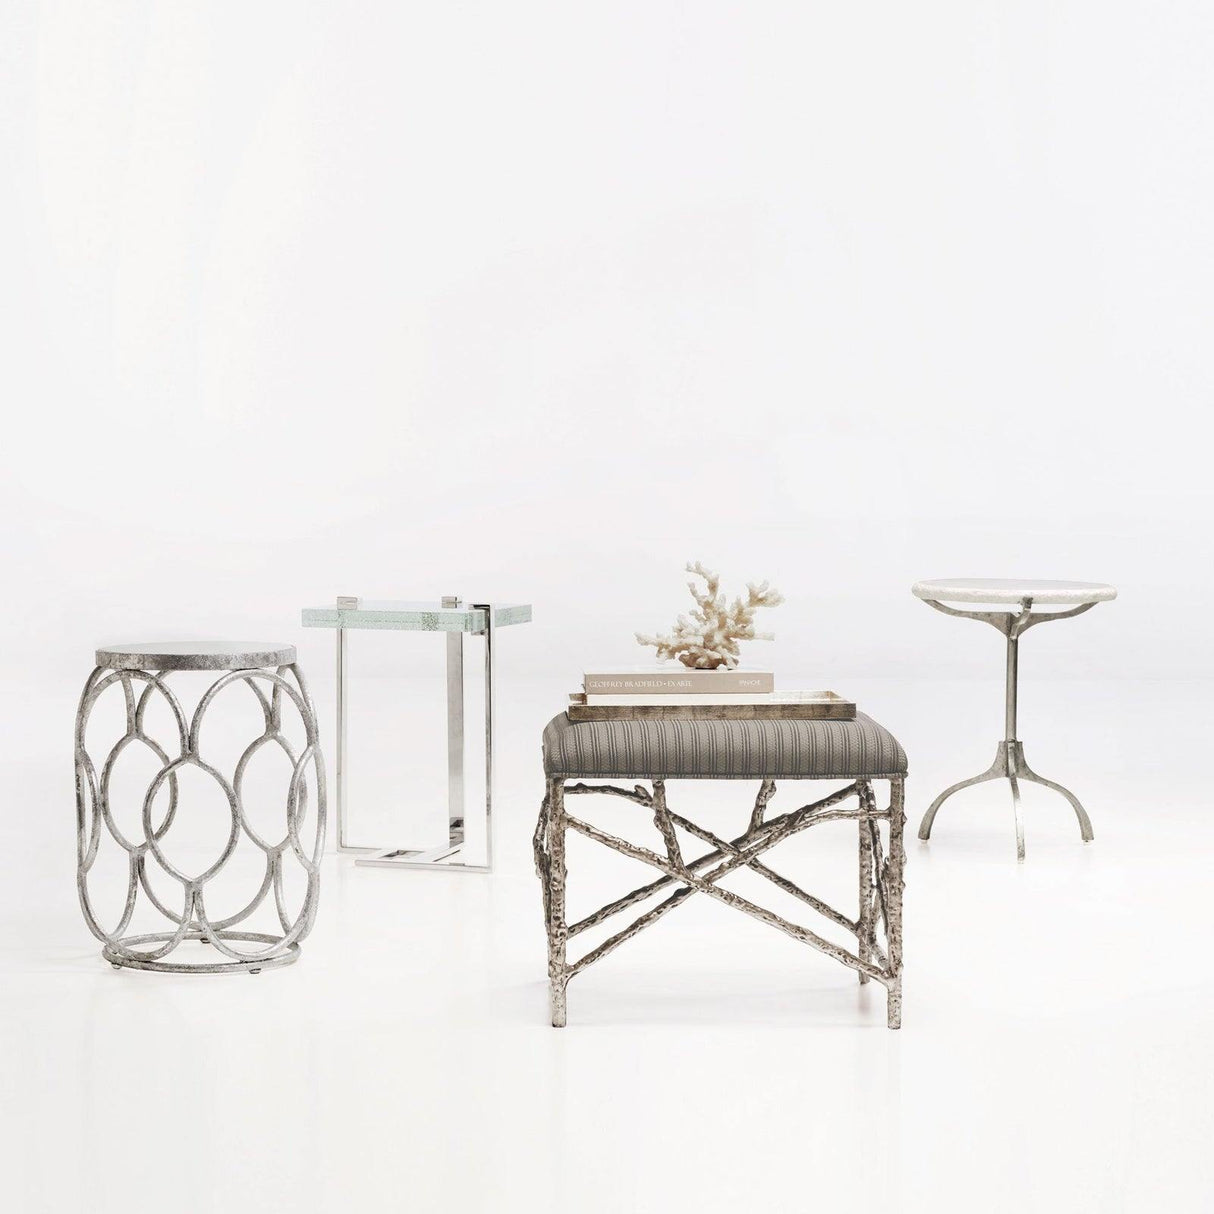 Bernhardt Interiors Hadera Chairside Table - Home Elegance USA